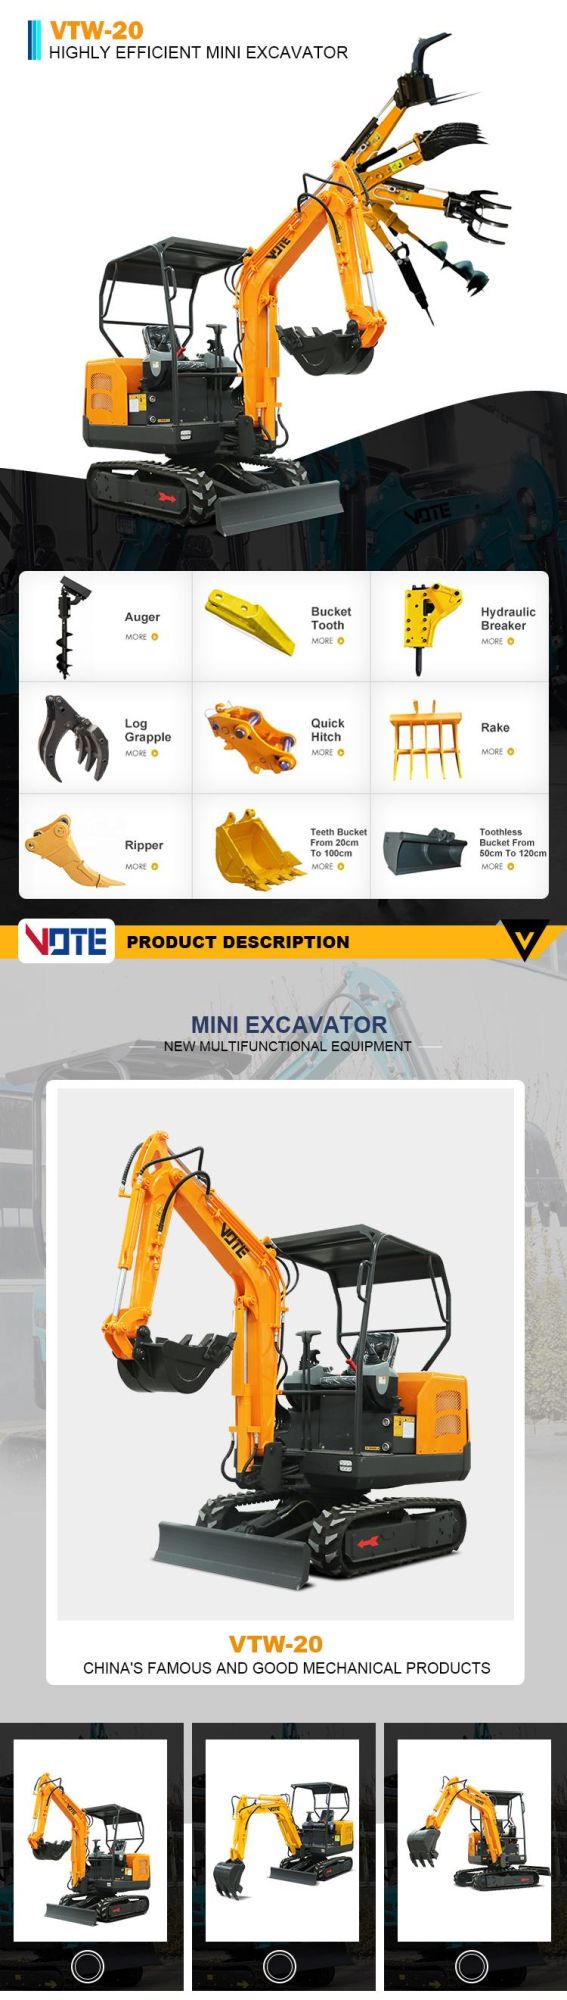 Hydraulic 2 Ton Crawler Mini Excavator Farm Channels Digger Excavators Pric Mini Digger 2 Ton with Cab